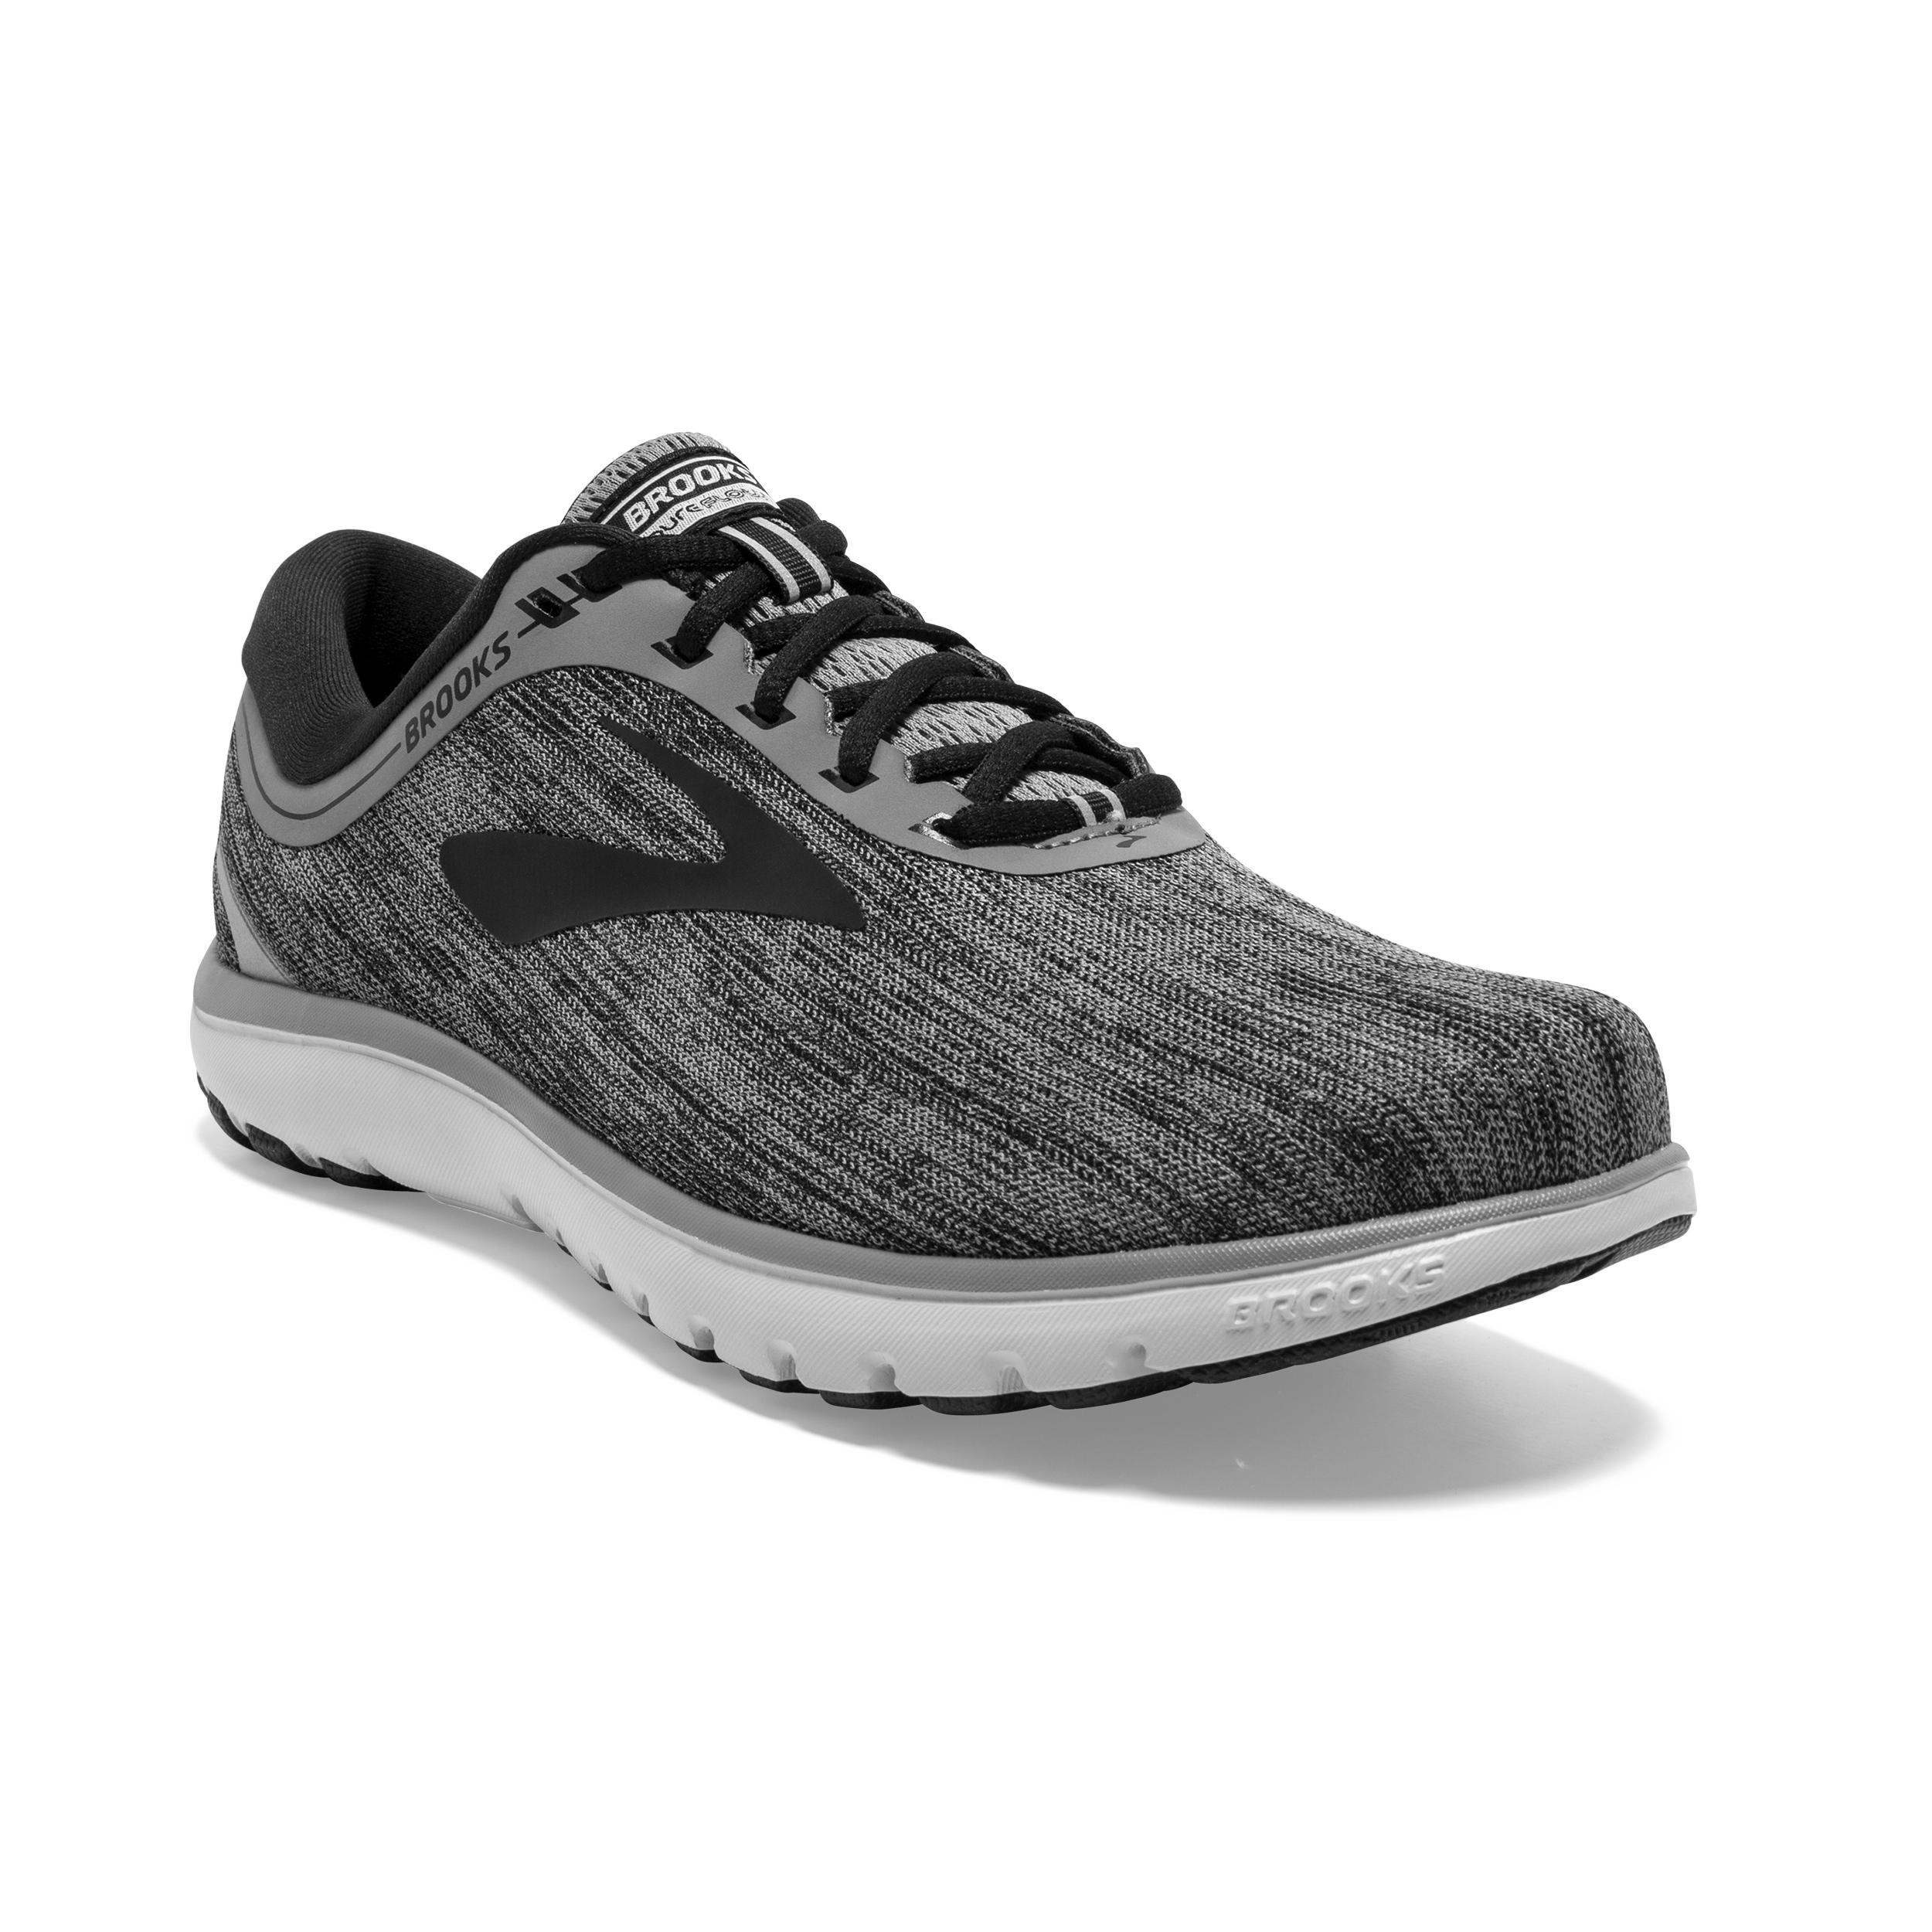 Black/White Brooks Men's PureFlow 7 Running Shoes US 11.5 D M 